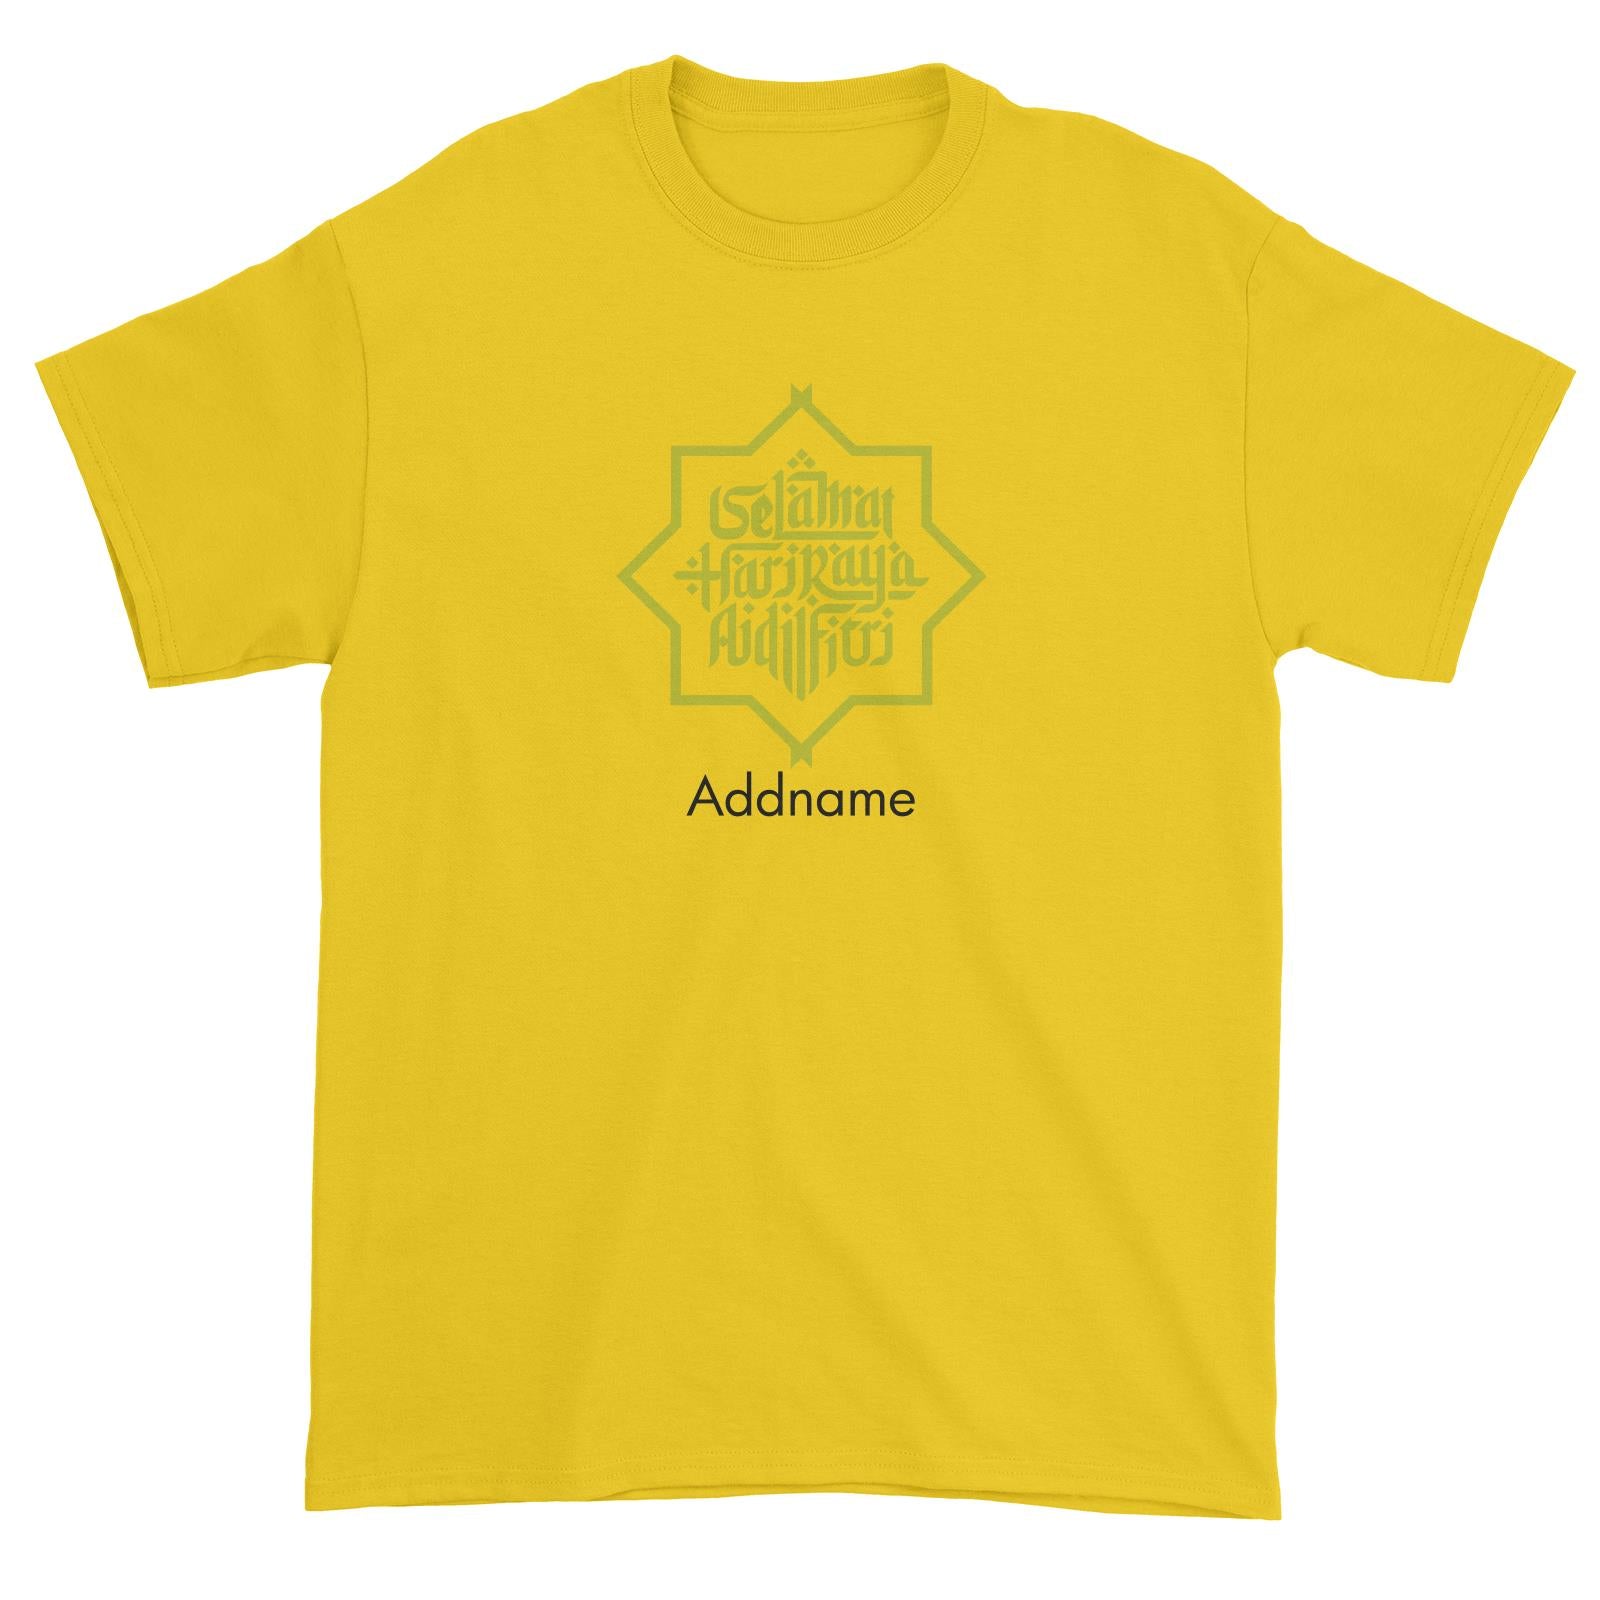 Selamat Hari Raya Aidilfitri Jawi Typography T-Shirt